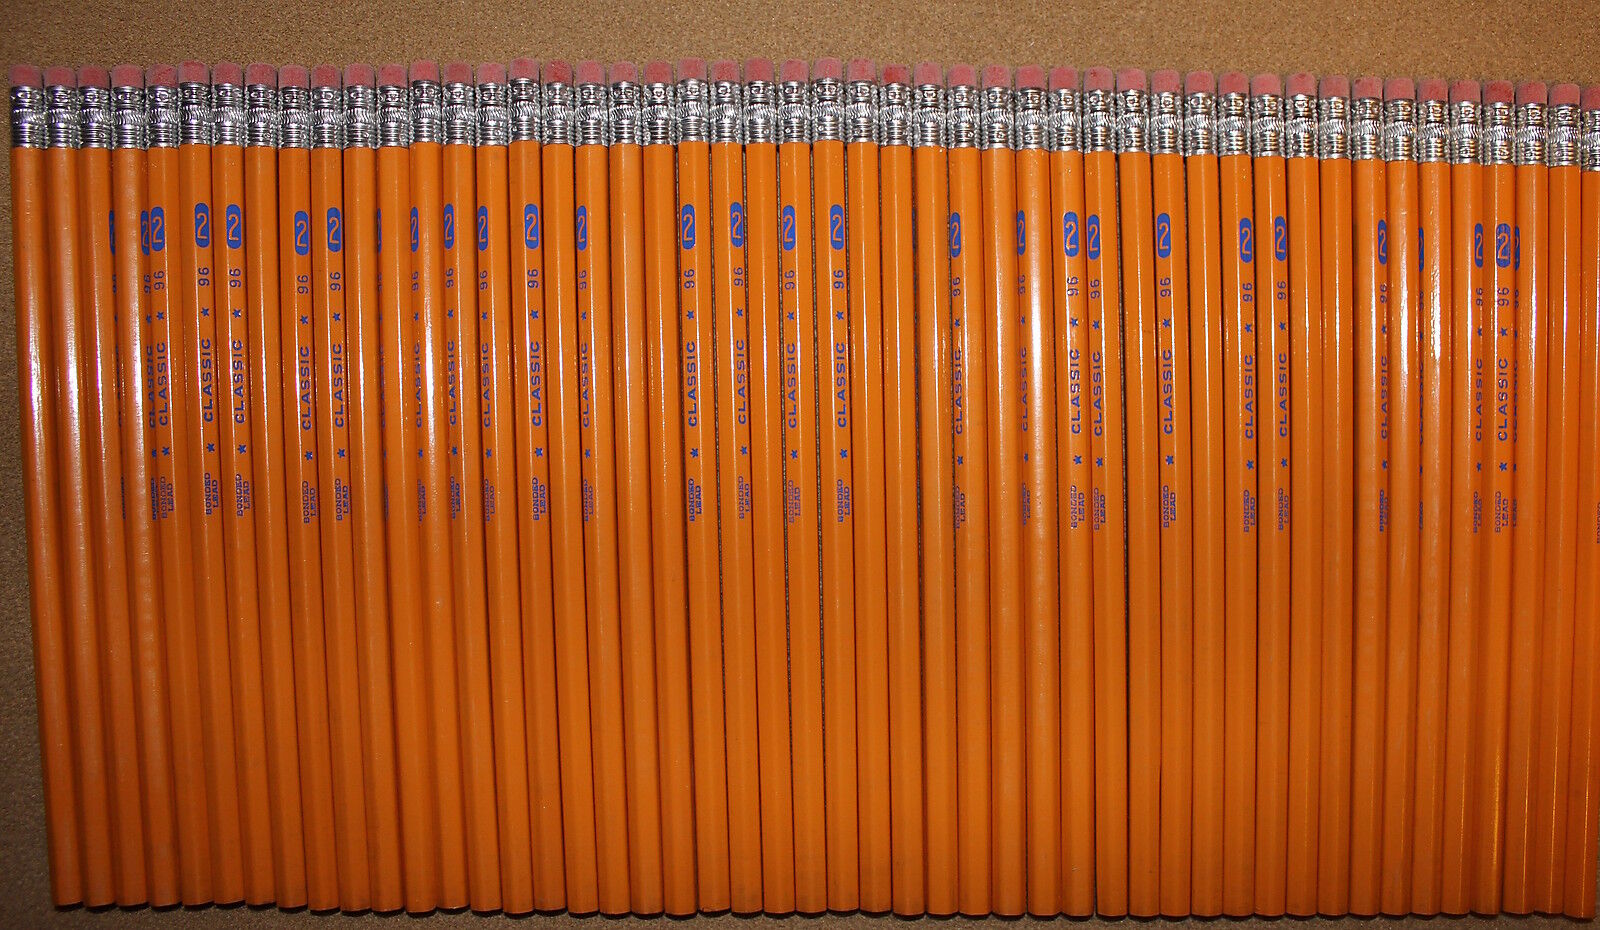 48 Vintage Unused Yellow/Orange Wood No 2 Classic School Pencils Made in USA